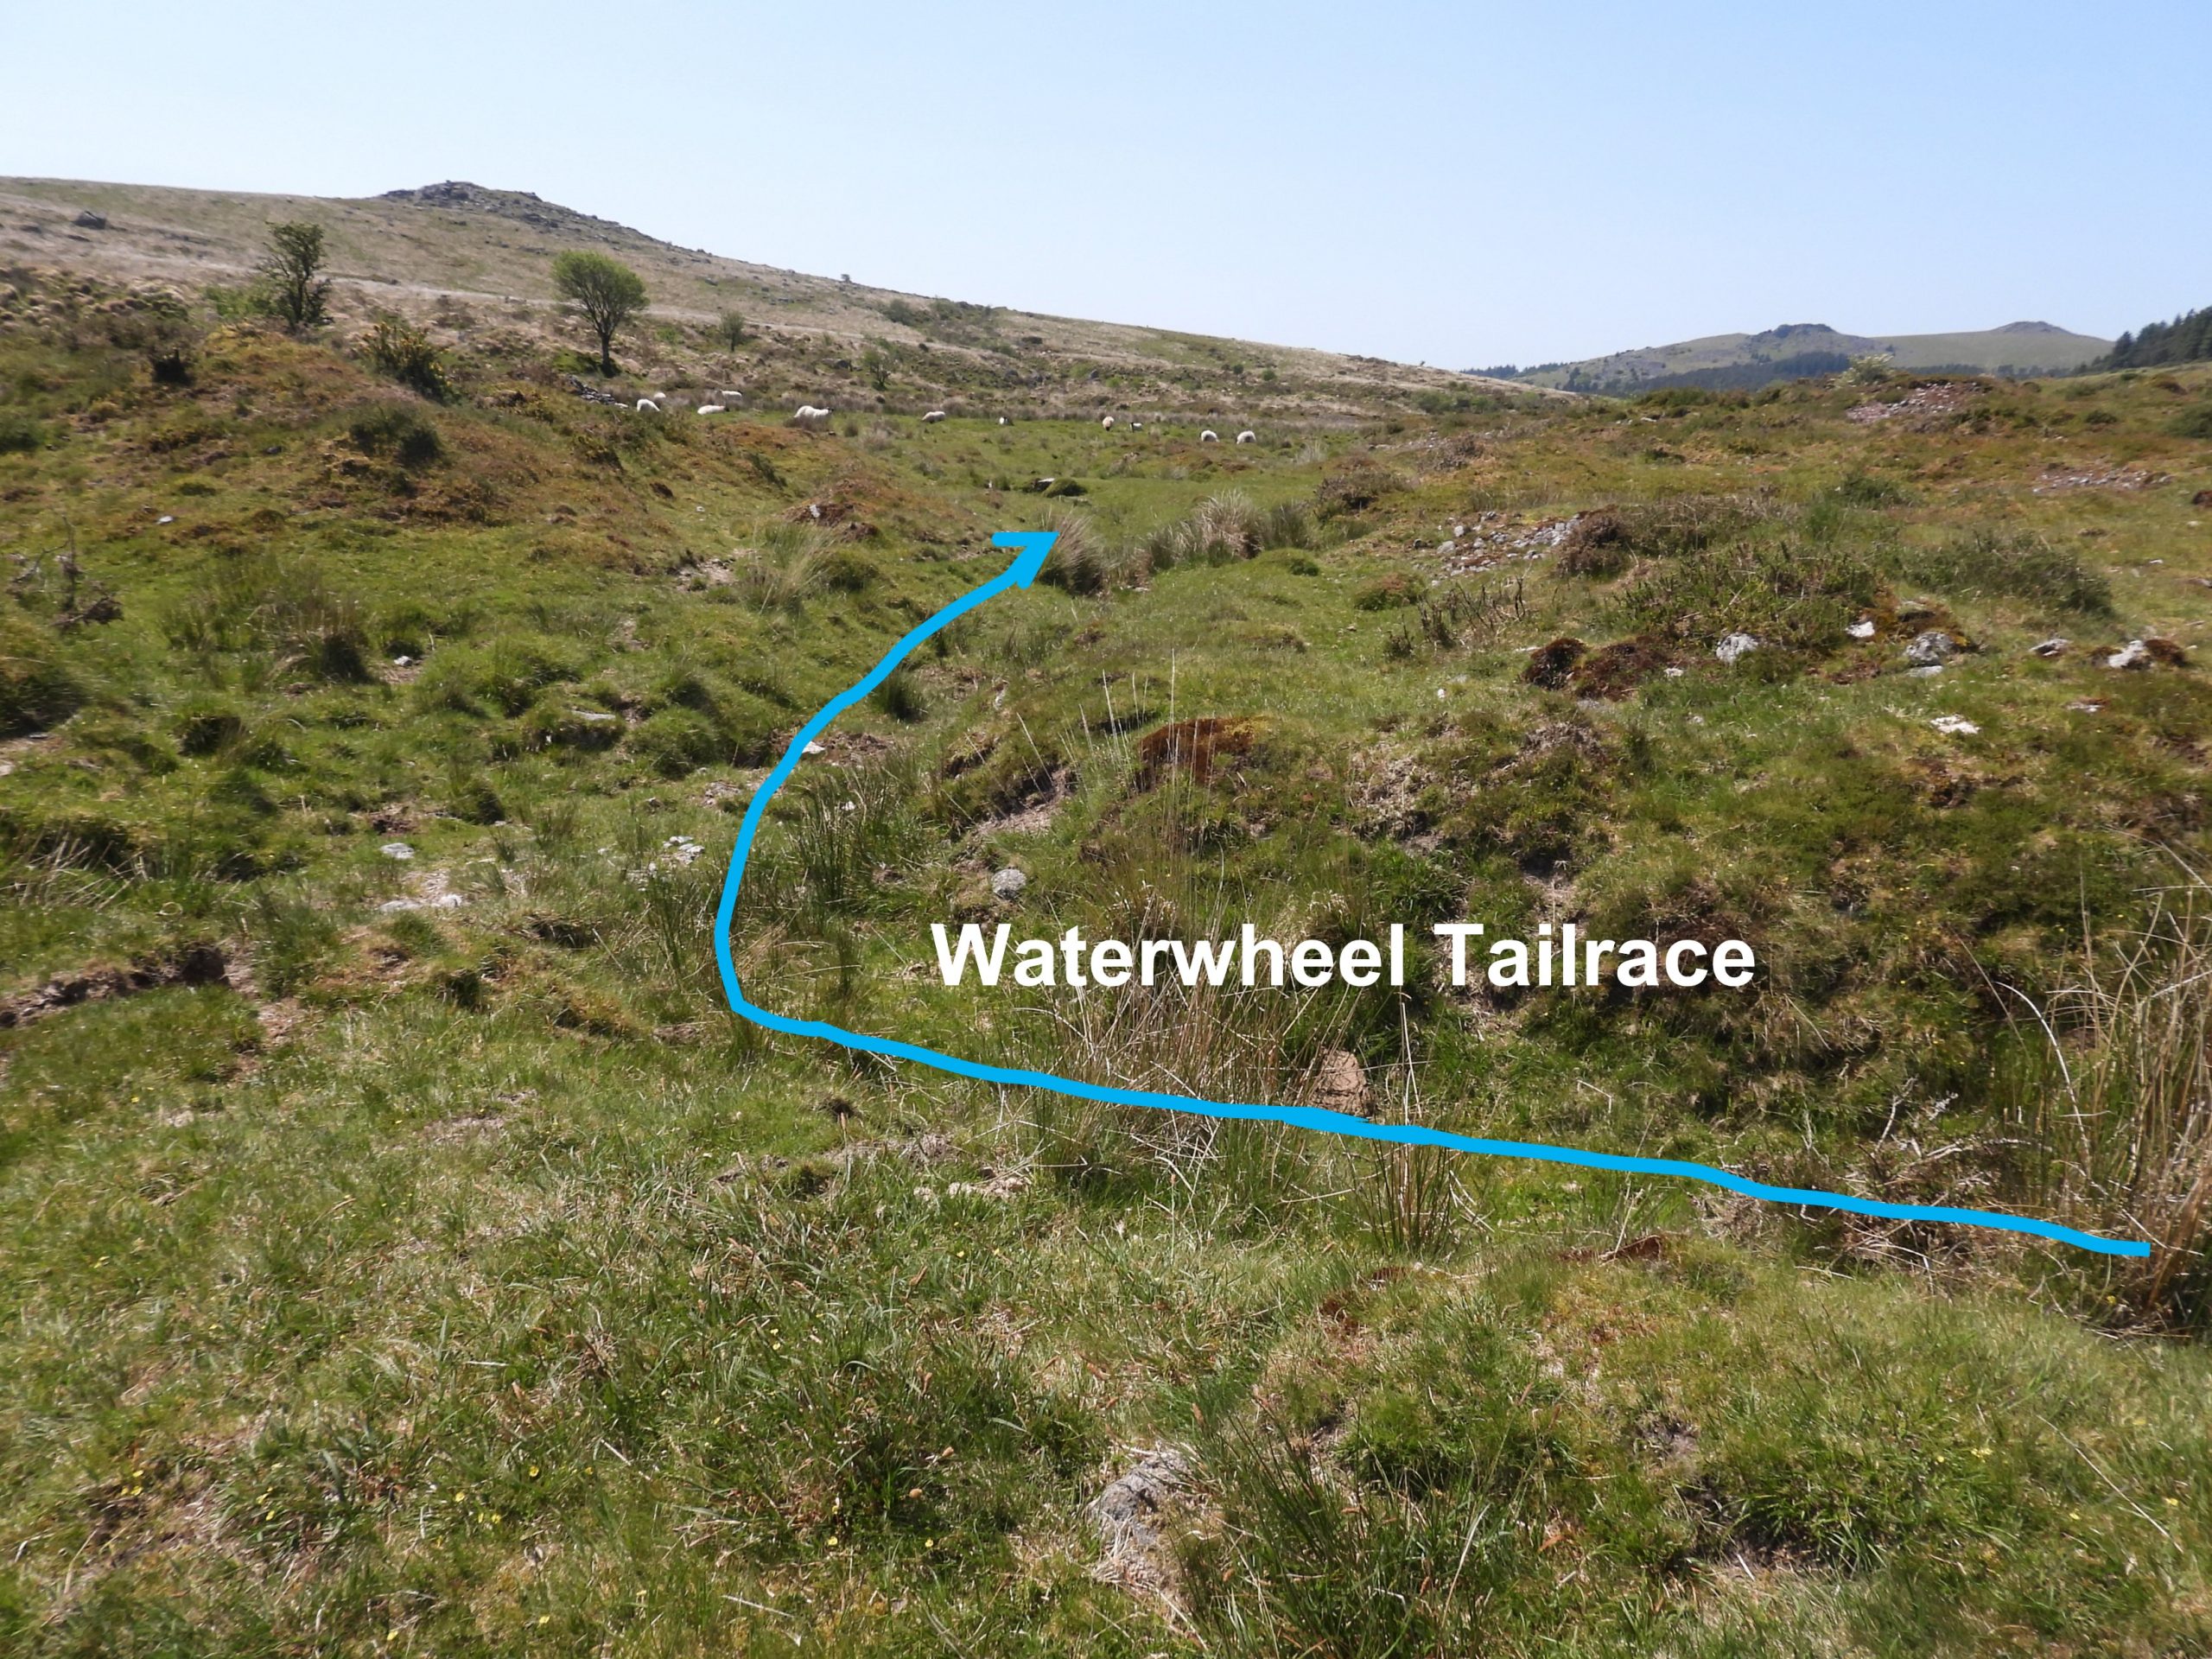 19. Waterwheel Tailrace a